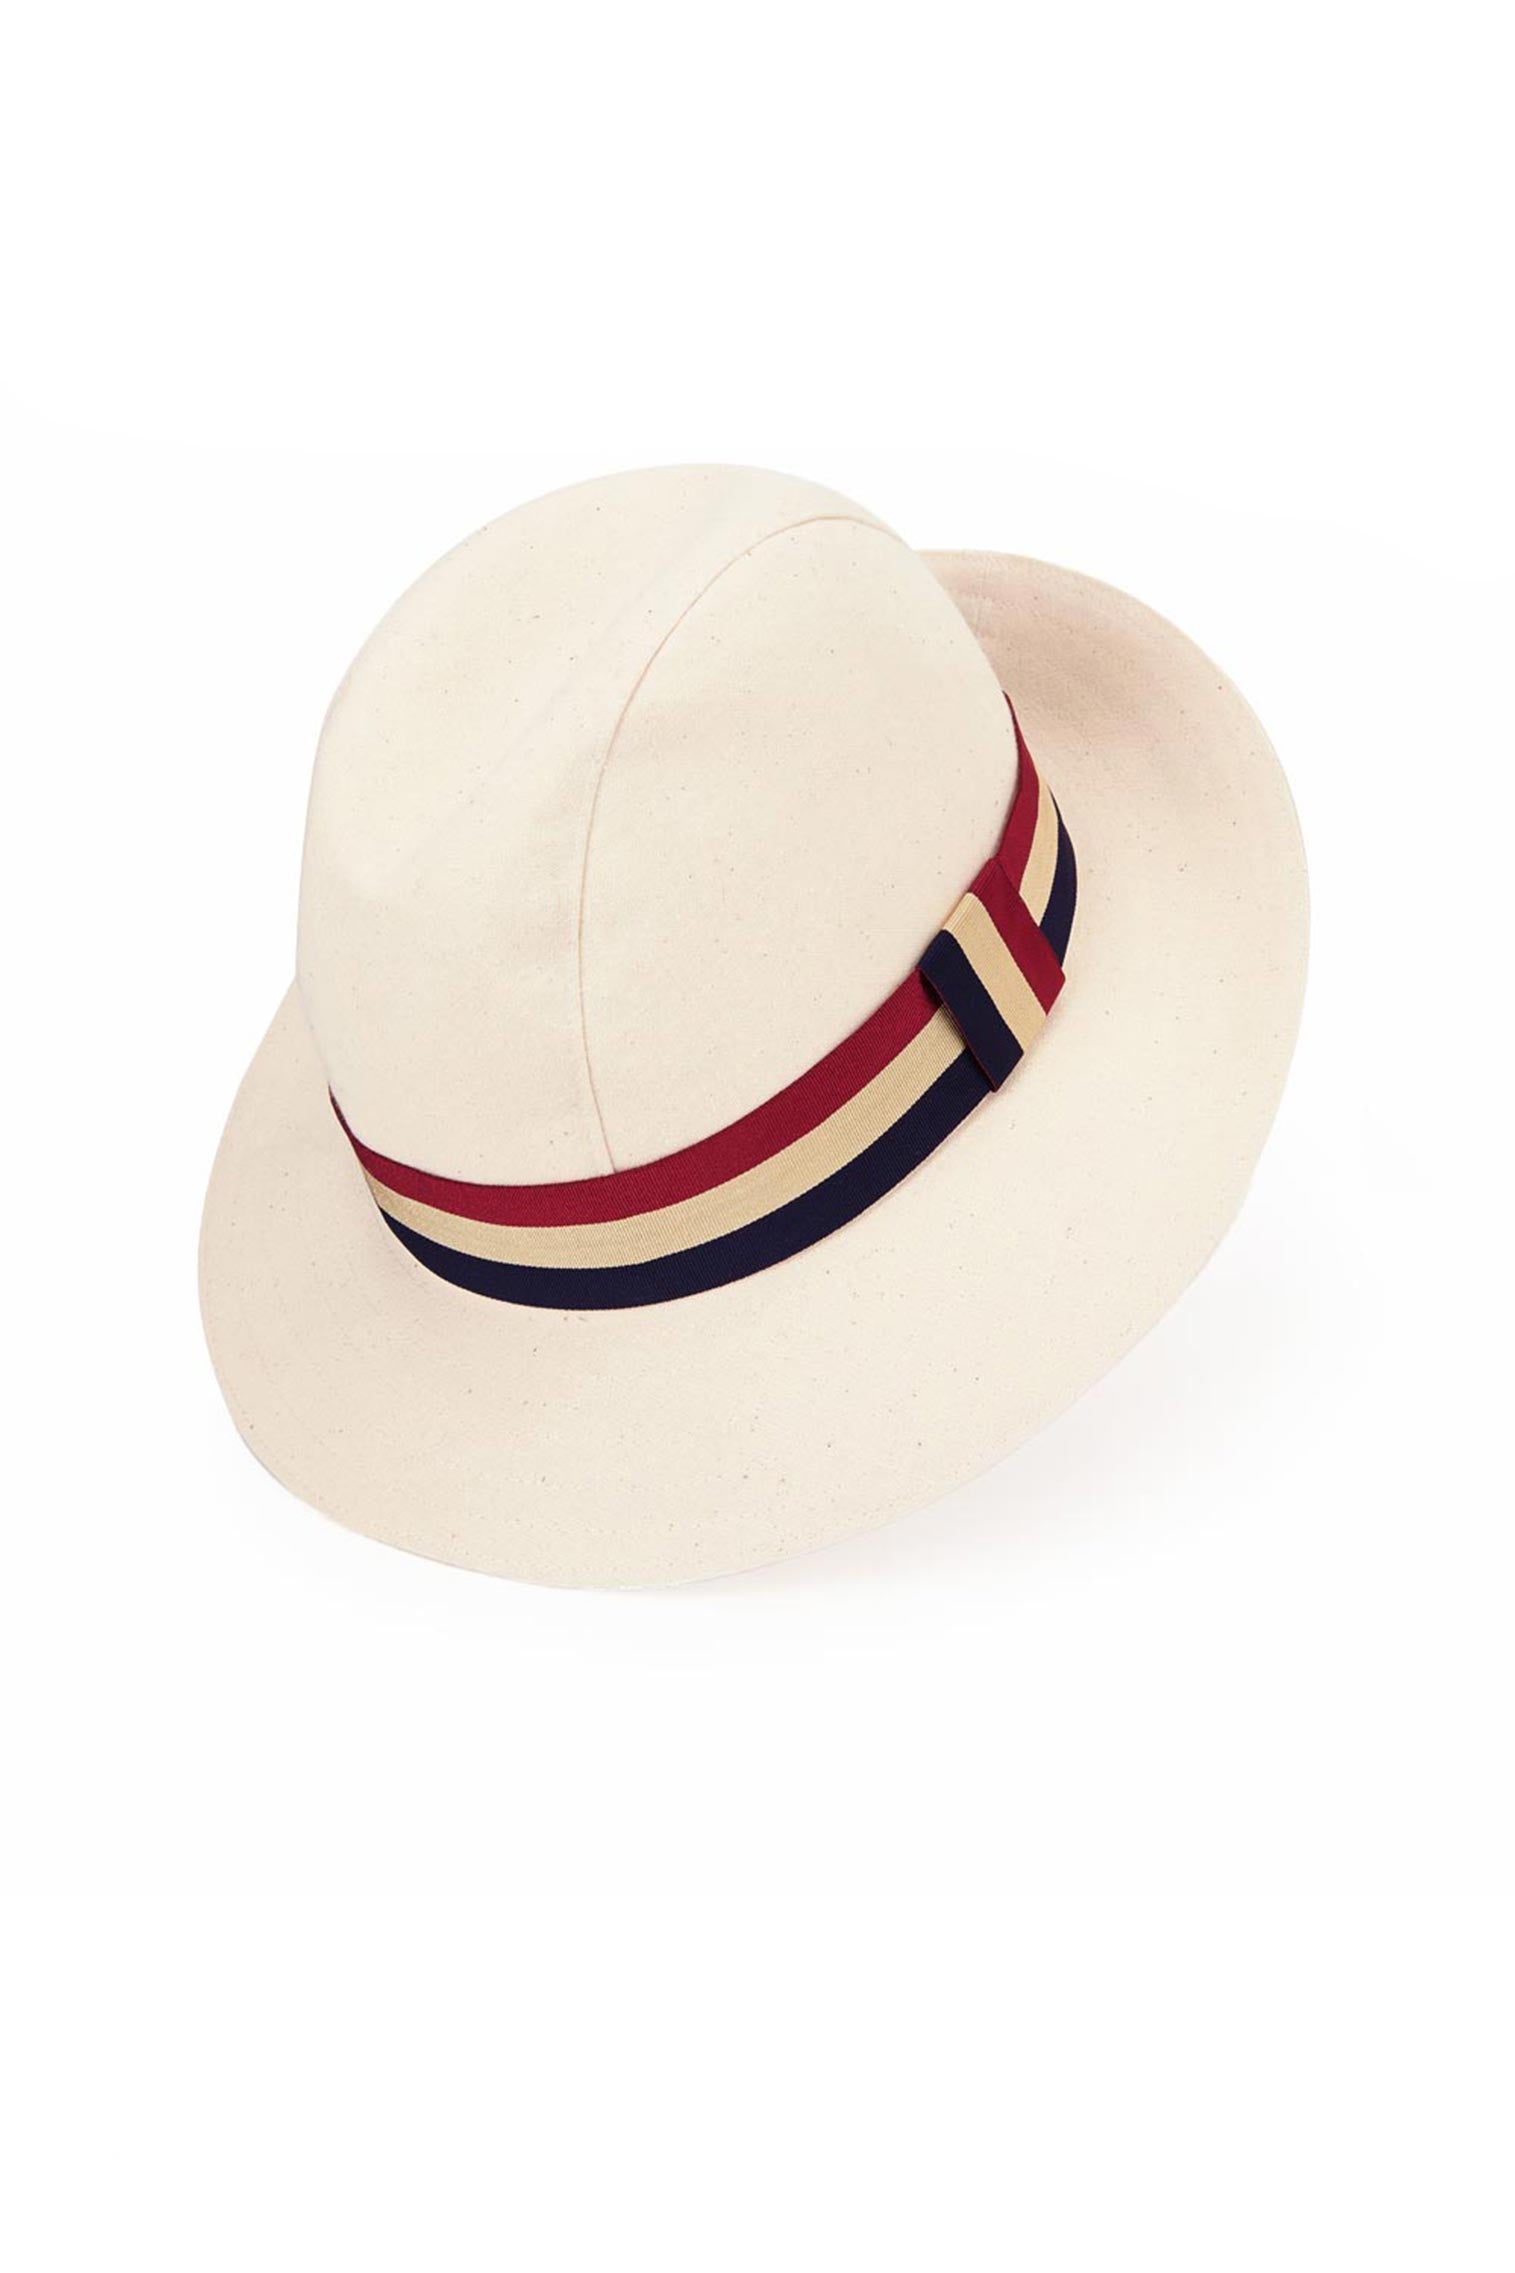 Monaco Hat - Panamas, Straw and Sun Hats for Men - Lock & Co. Hatters London UK